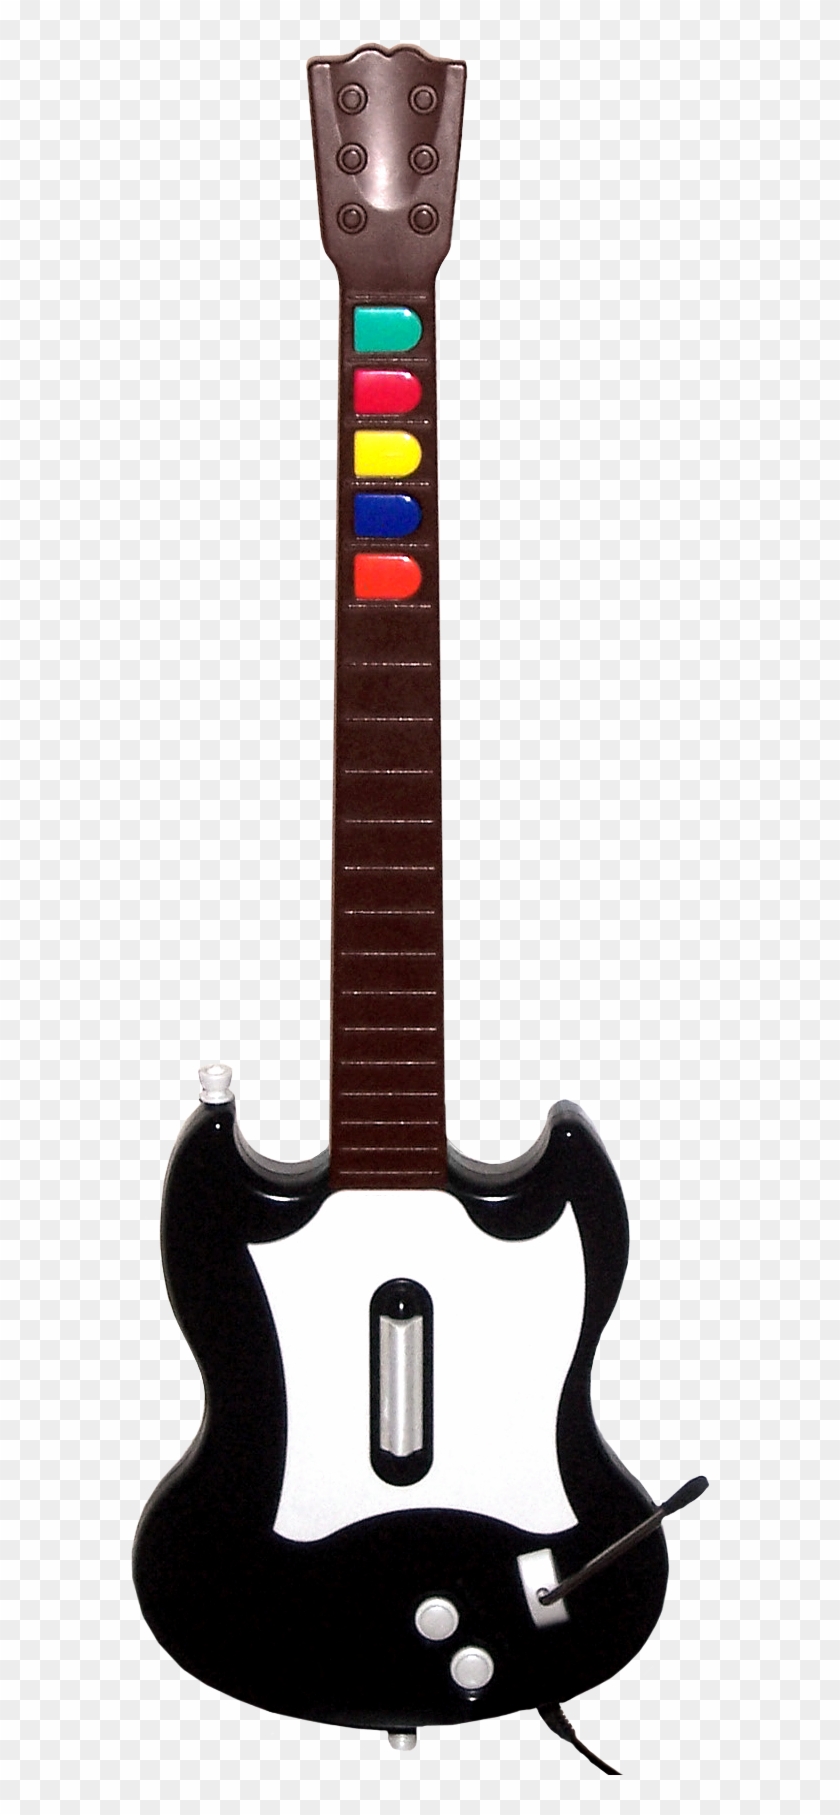 Guitar Hero Controller - Guitar Hero Controller Png Clipart #19654